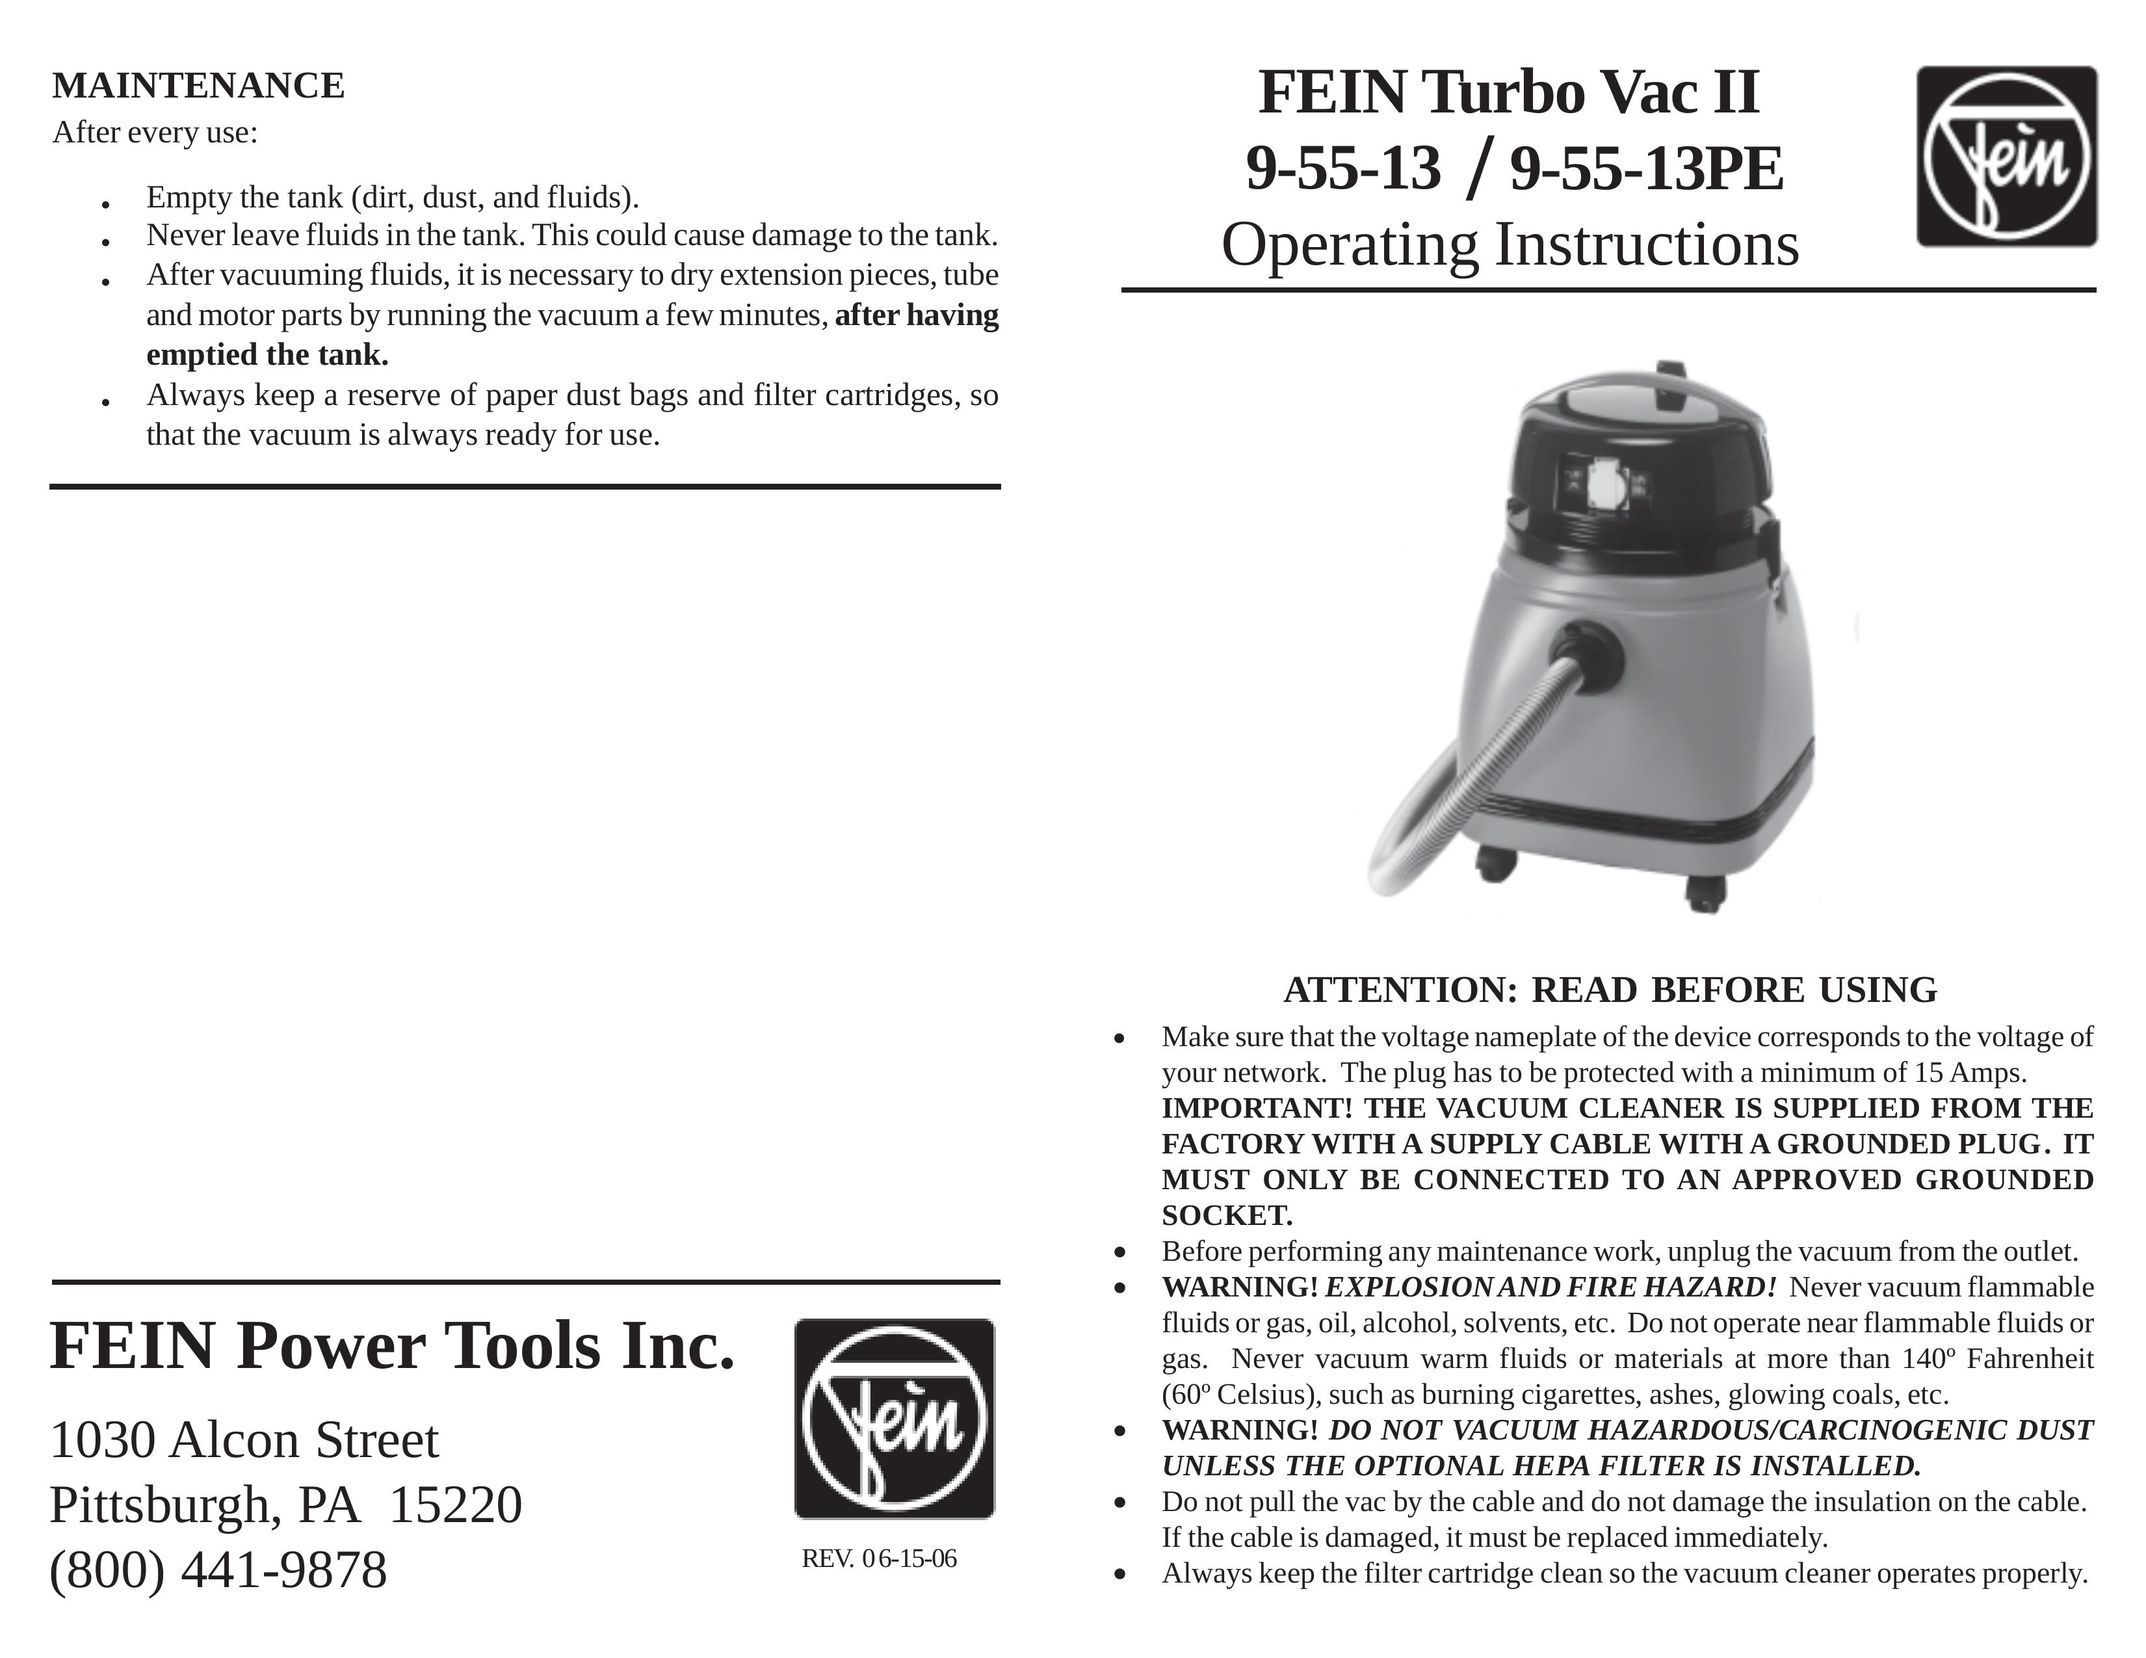 FEIN Power Tools 9-55-13PE Vacuum Cleaner User Manual